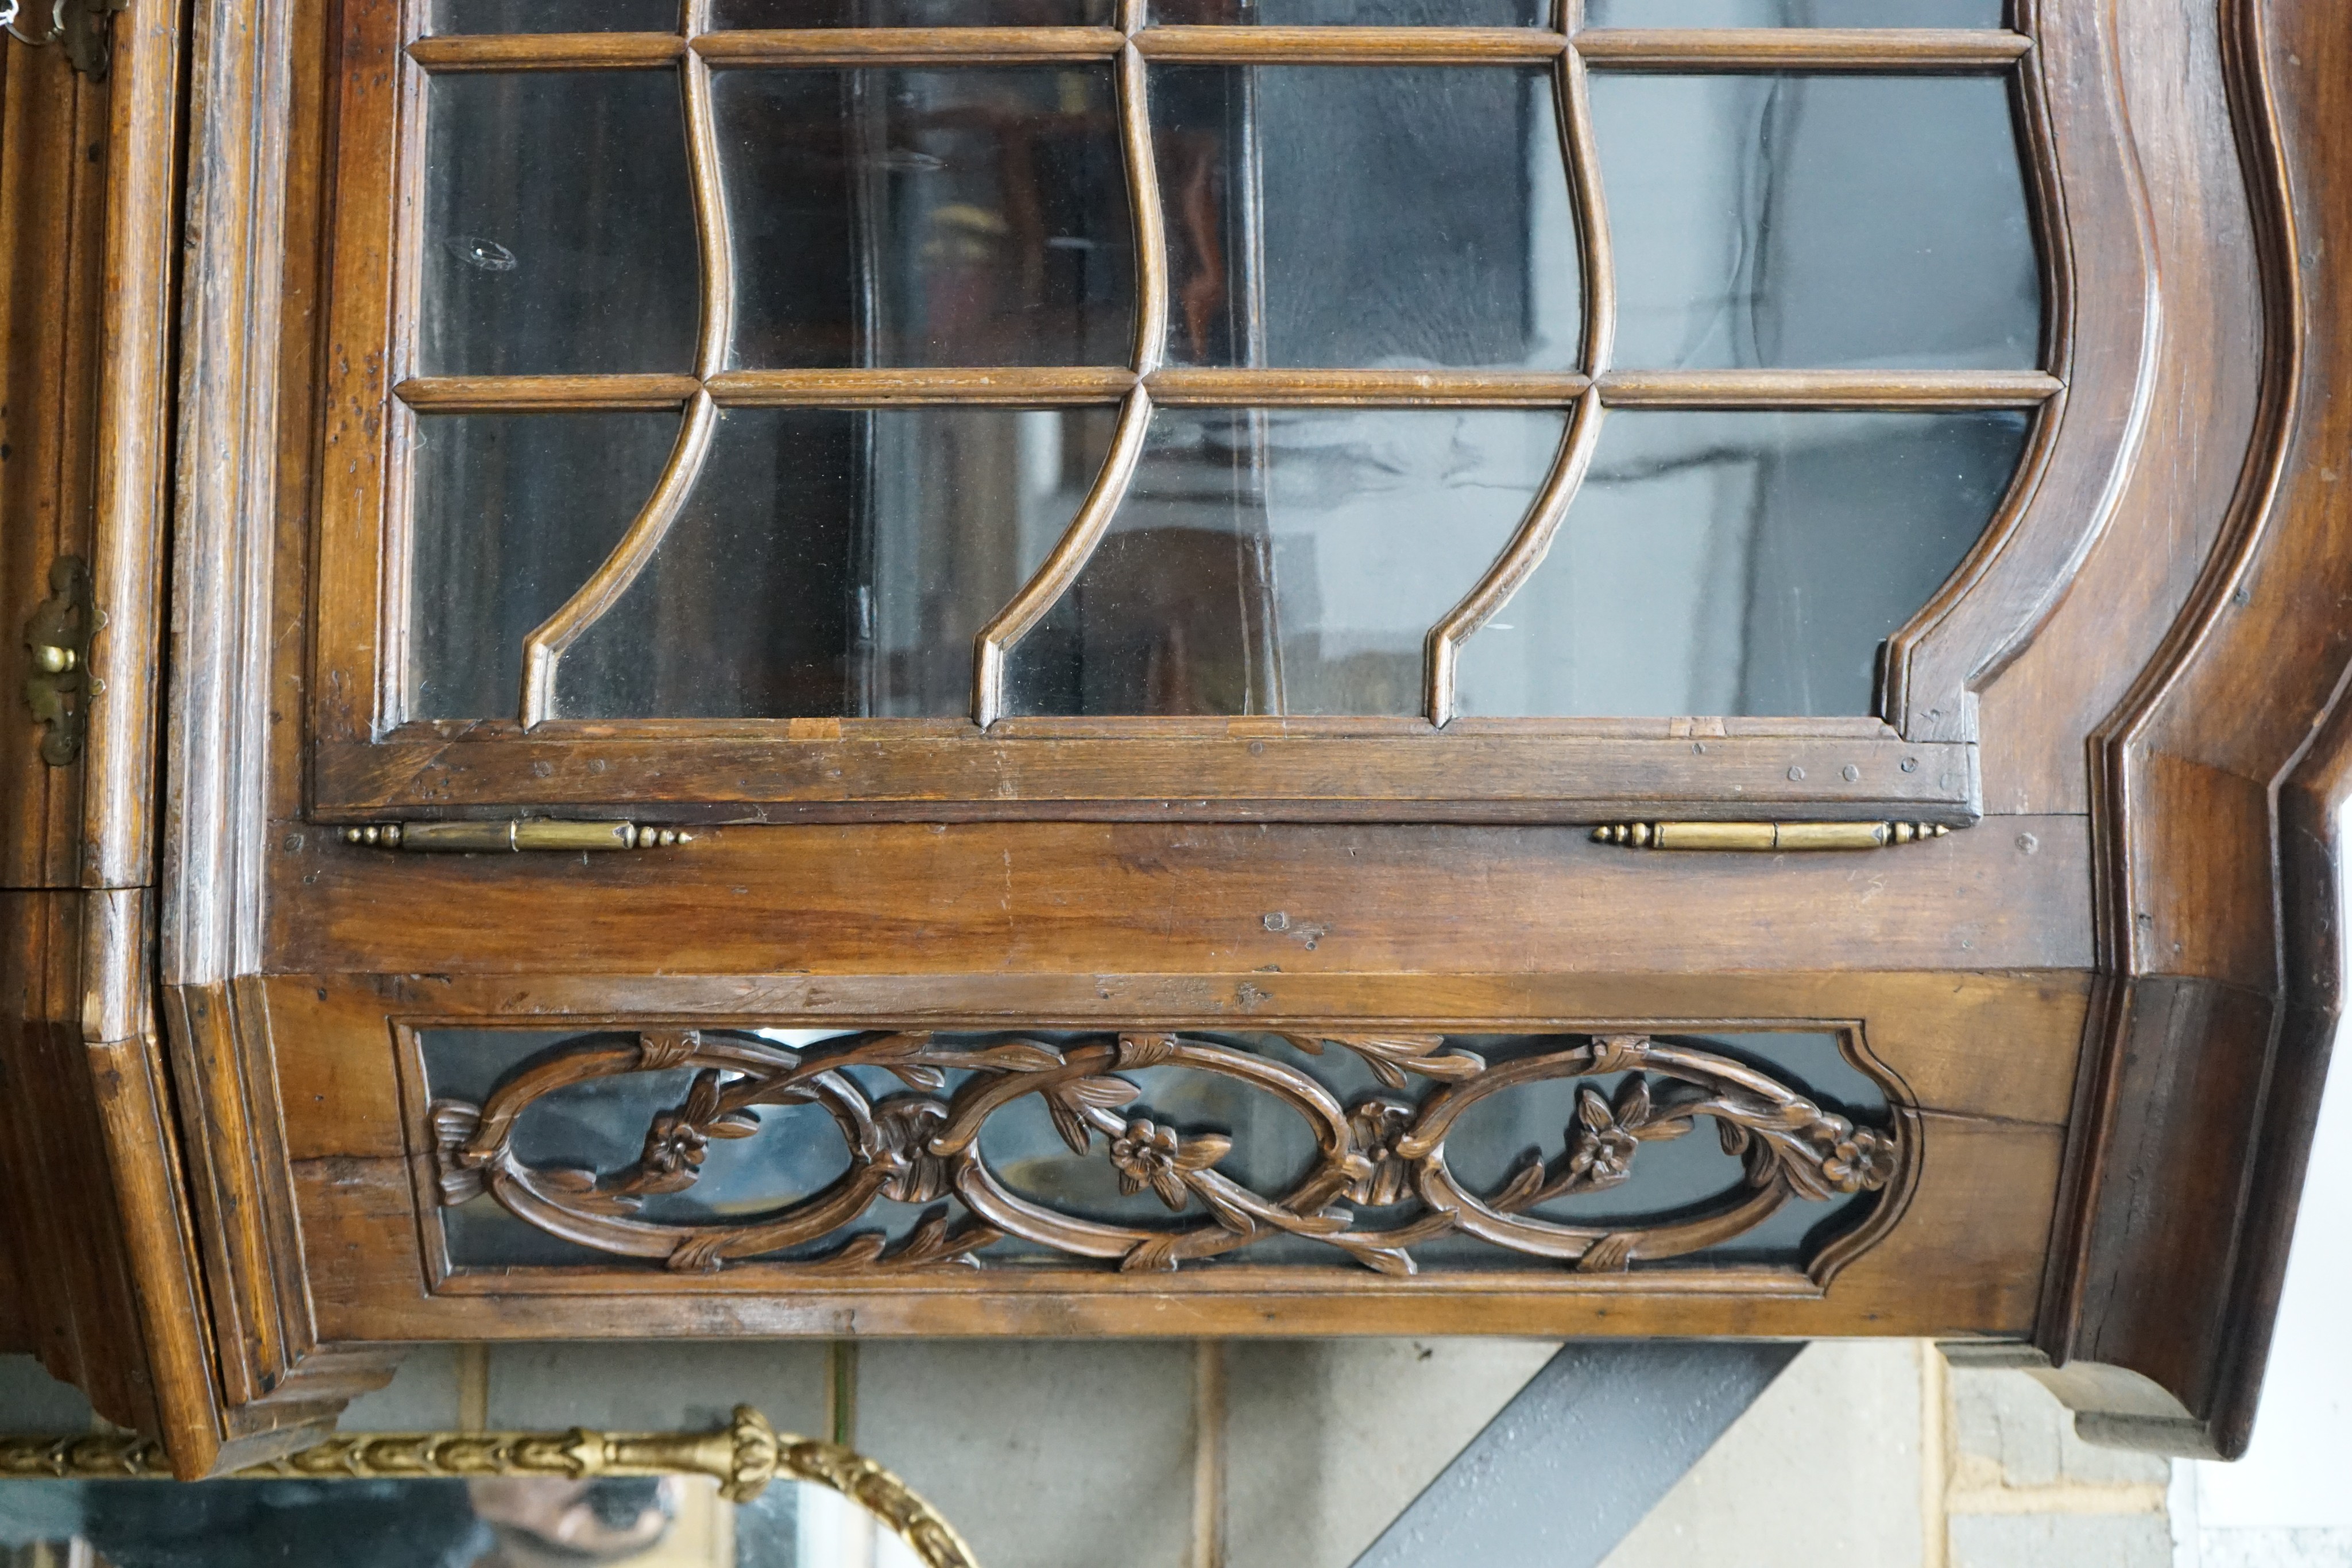 A 19th century Dutch oak and walnut glazed display cabinet, width 174cms, depth 47cms, height 227cms.